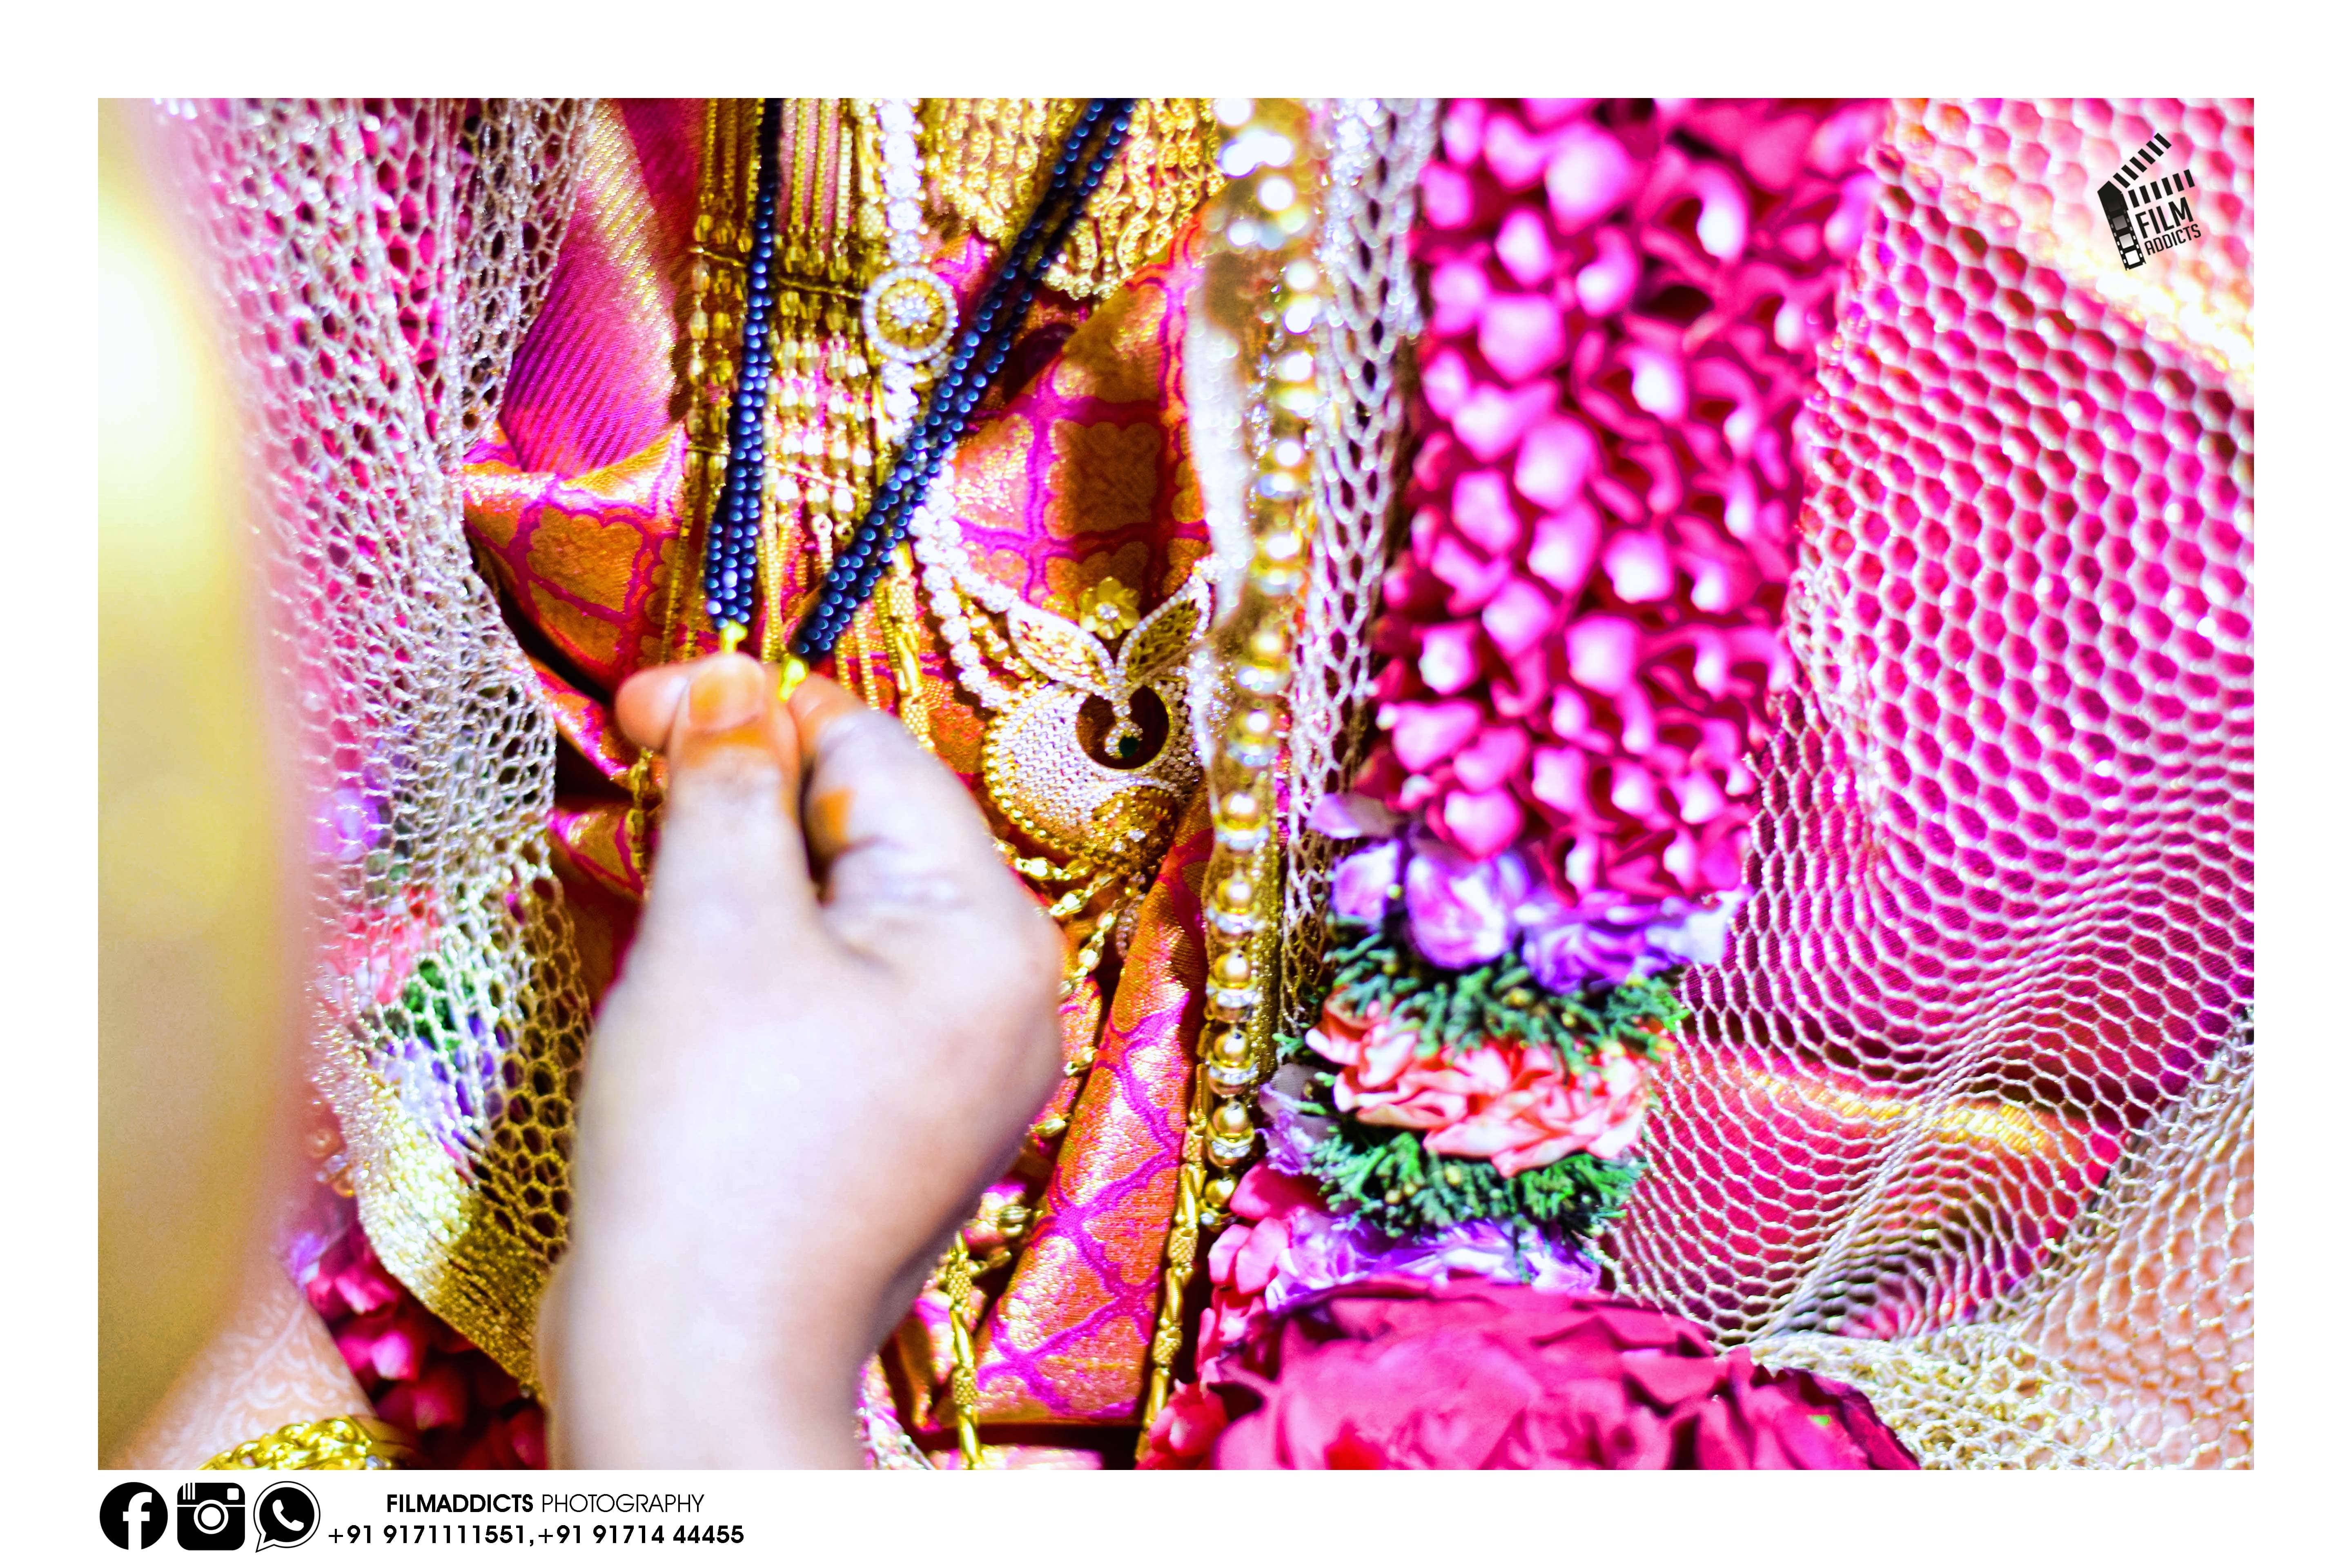 Best Muslim Wedding Photographers in Madurai,Best Muslim photography in Madurai,Best candid photographers in Madurai,Best candid photography in Madurai,Best marriage photographers in Madurai,Best marriage photography in Madurai,Best photographers in Madurai,Best photography in Madurai,Best Muslim candid photography in Madurai,Best Muslim candid photographers in Madurai,Best Muslim video in Madurai,Best Muslim videographers in Madurai,Best Muslim videography in Madurai,Best candid videographers in Madurai,Best candid videography in Madurai,Best marriage videographers in Madurai,Best marriage videography in Madurai,Best videographers in Madurai,Best videography in Madurai,Best Muslim candid videography in Madurai,Best Muslim candid videographers in Madurai,Best helicam operators in Madurai,Best drone operators in Madurai,Best Muslim studio in Madurai,Best Muslim Wedding Photographers in Madurai,Best Muslim photography in Madurai,No.1 Muslim photographers in Madurai,No.1 Muslim photography in Madurai,Madurai Muslim photographers,Madurai Muslim photography,Madurai Muslim videos,Best candid videos in Madurai,Best candid photos in Madurai,Best helicam operators photography in Madurai,Best helicam operator photographers in Madurai,Best Muslim videography in Madurai,Best Muslim photography in Madurai,Best Muslim photography in Madurai,Best Muslim Wedding Photographers in Madurai,Best drone operators photographers in Madurai,Best Muslim candid videography in Madurai,tamilnadu Muslim photography, tamilnadu.